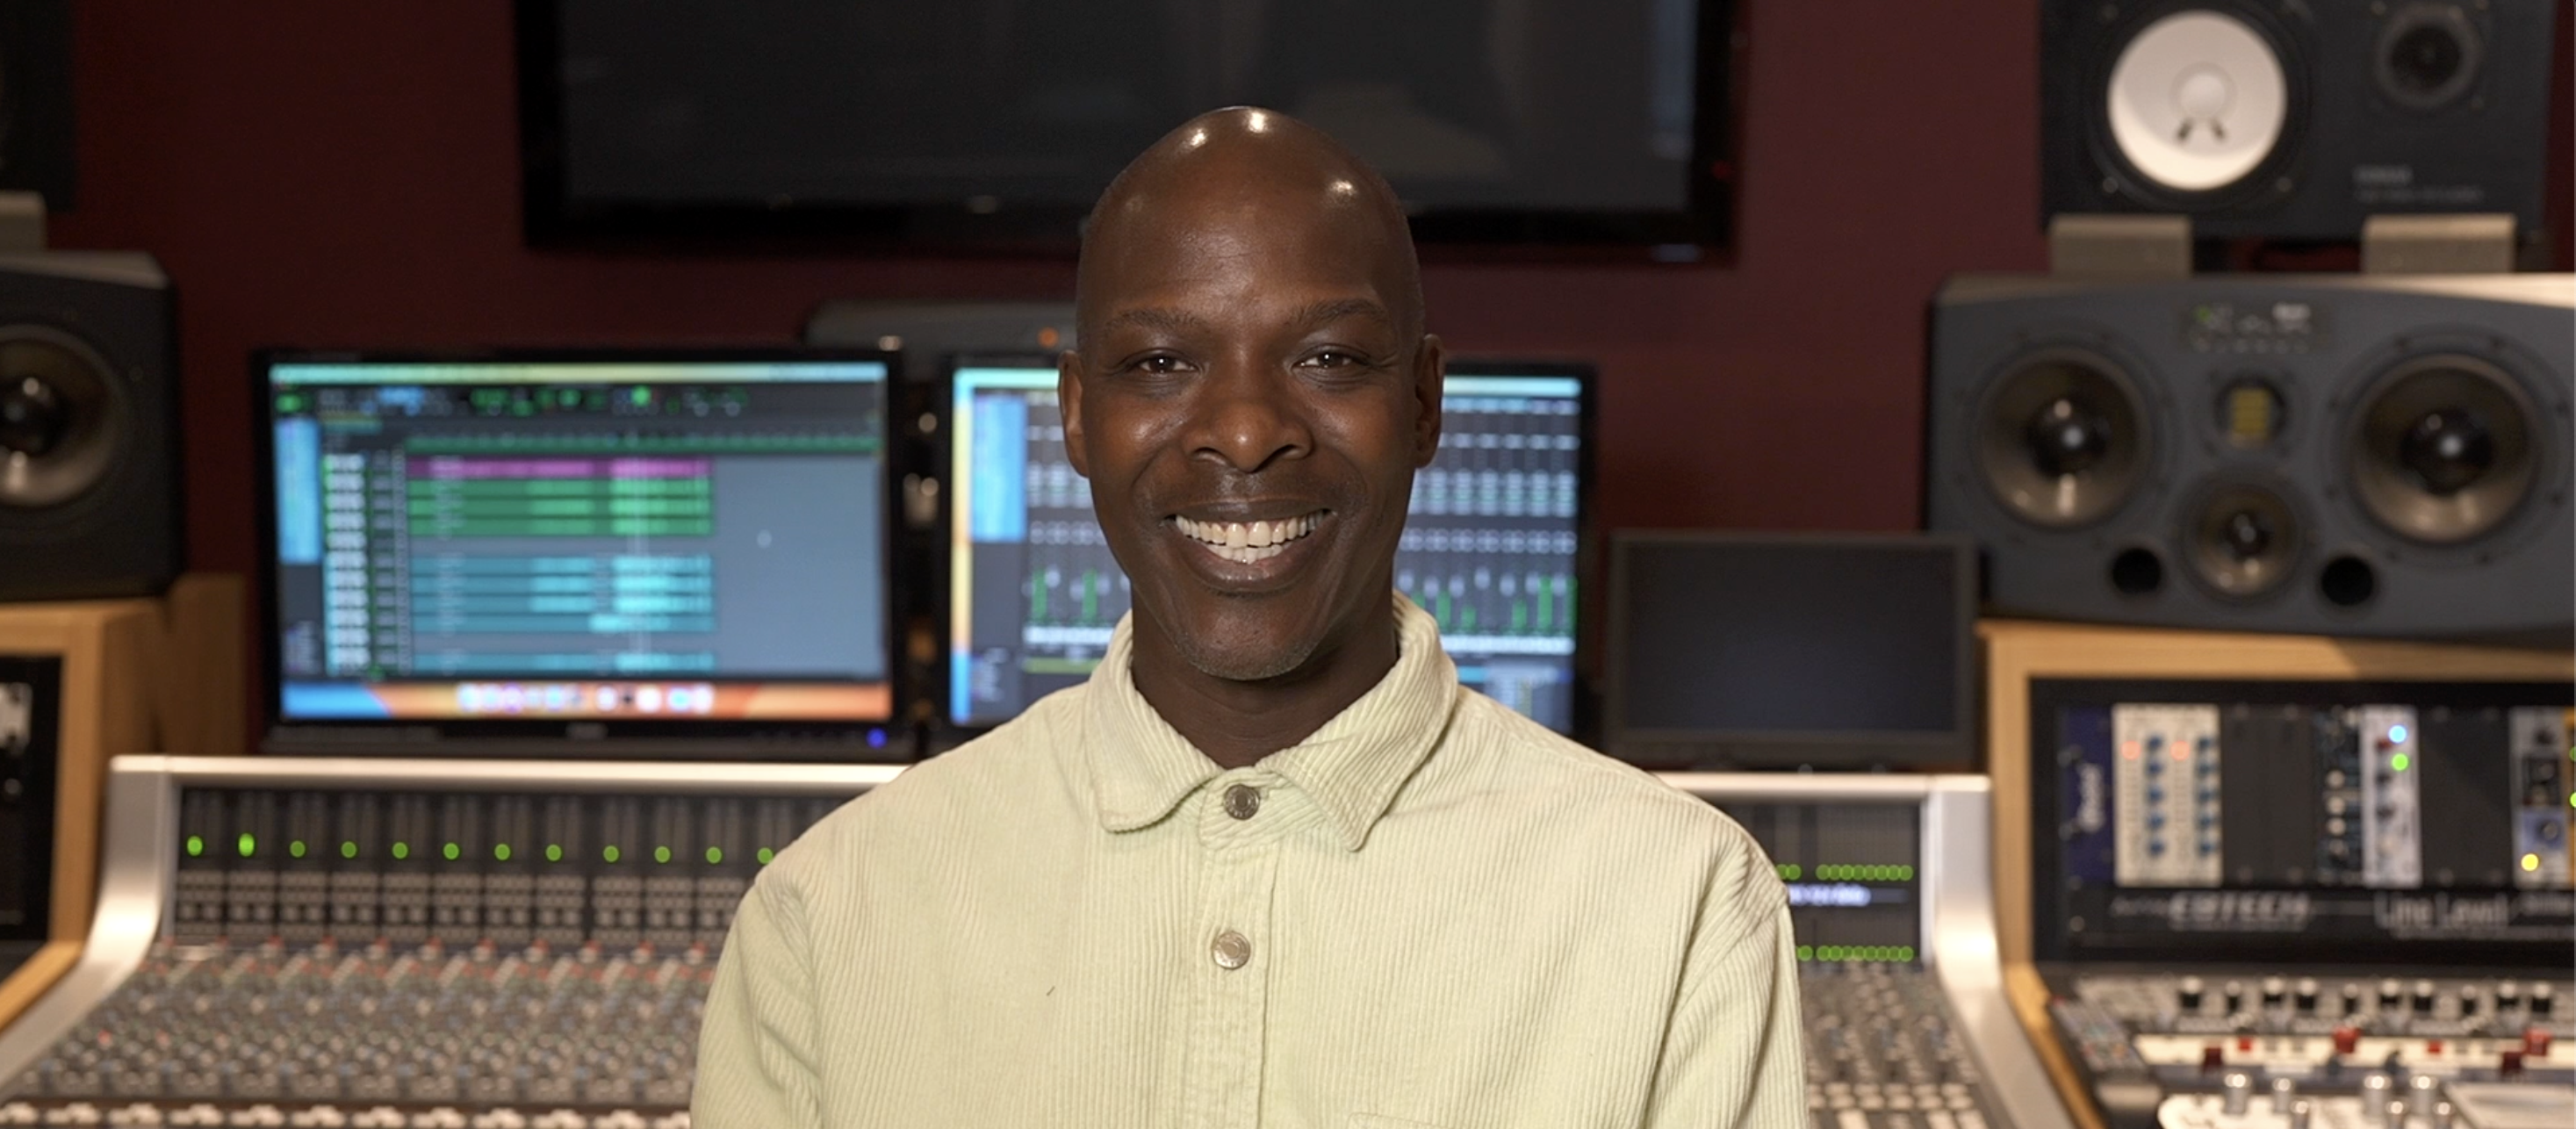 Black music technology tutor smiling in music studio